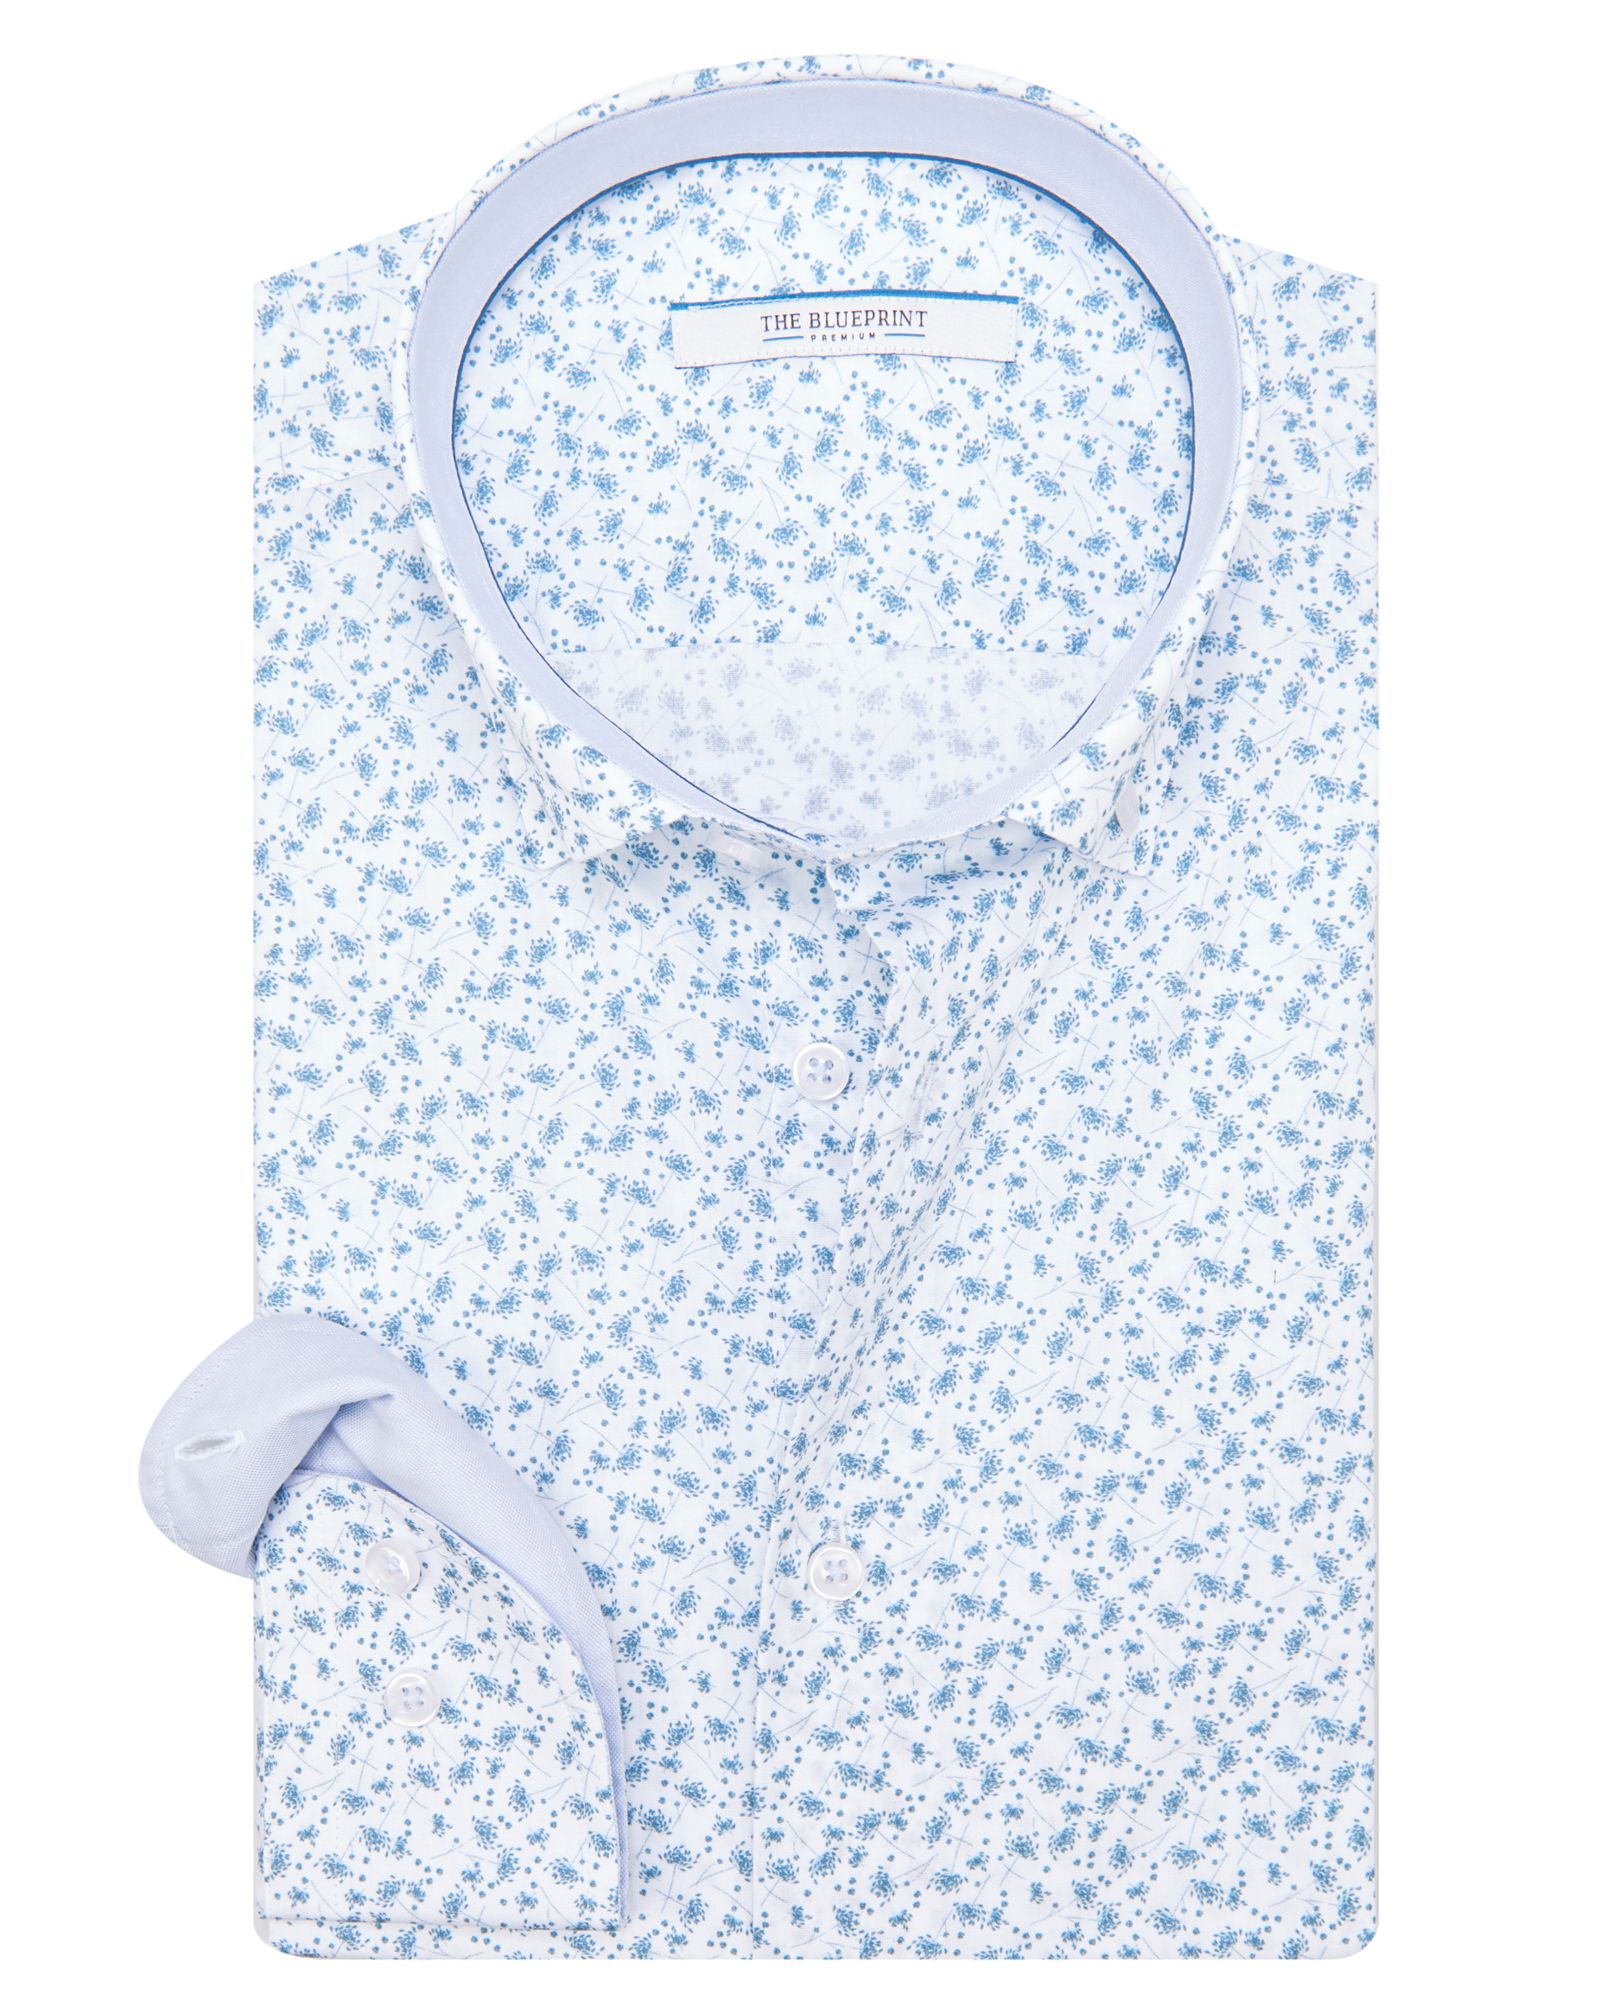 The BLUEPRINT Premium Casual Overhemd LM Lichtblauw dessin 082226-001-L